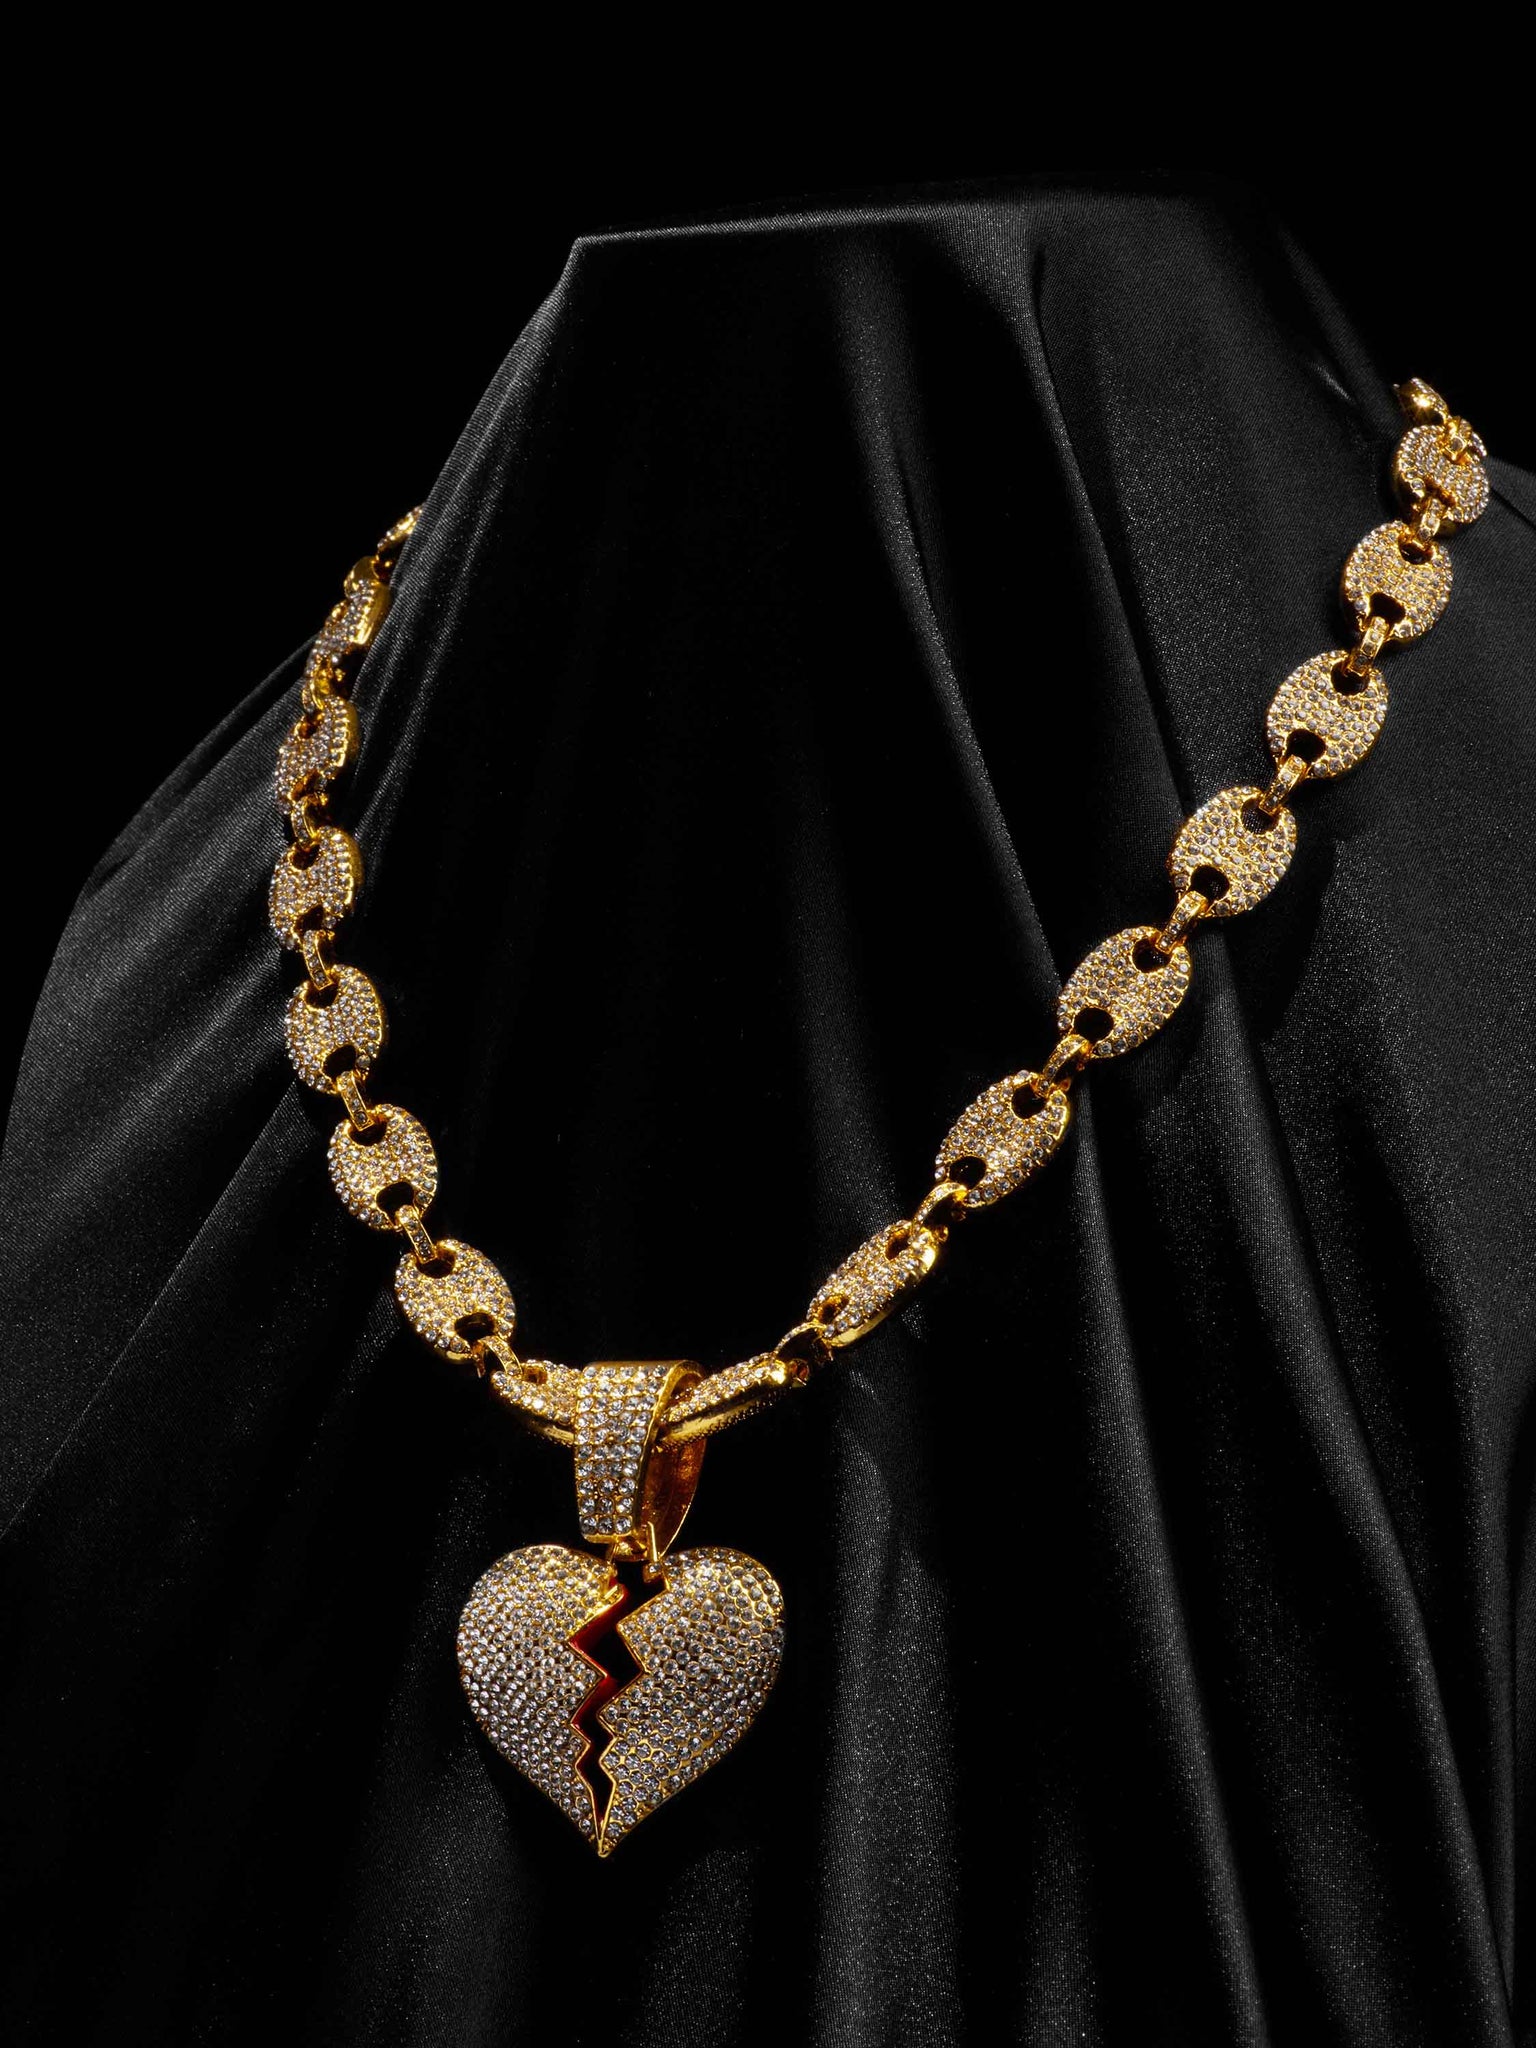 The Supermade Heartbreak Hip-hop Cuba Chain Necklace-1513